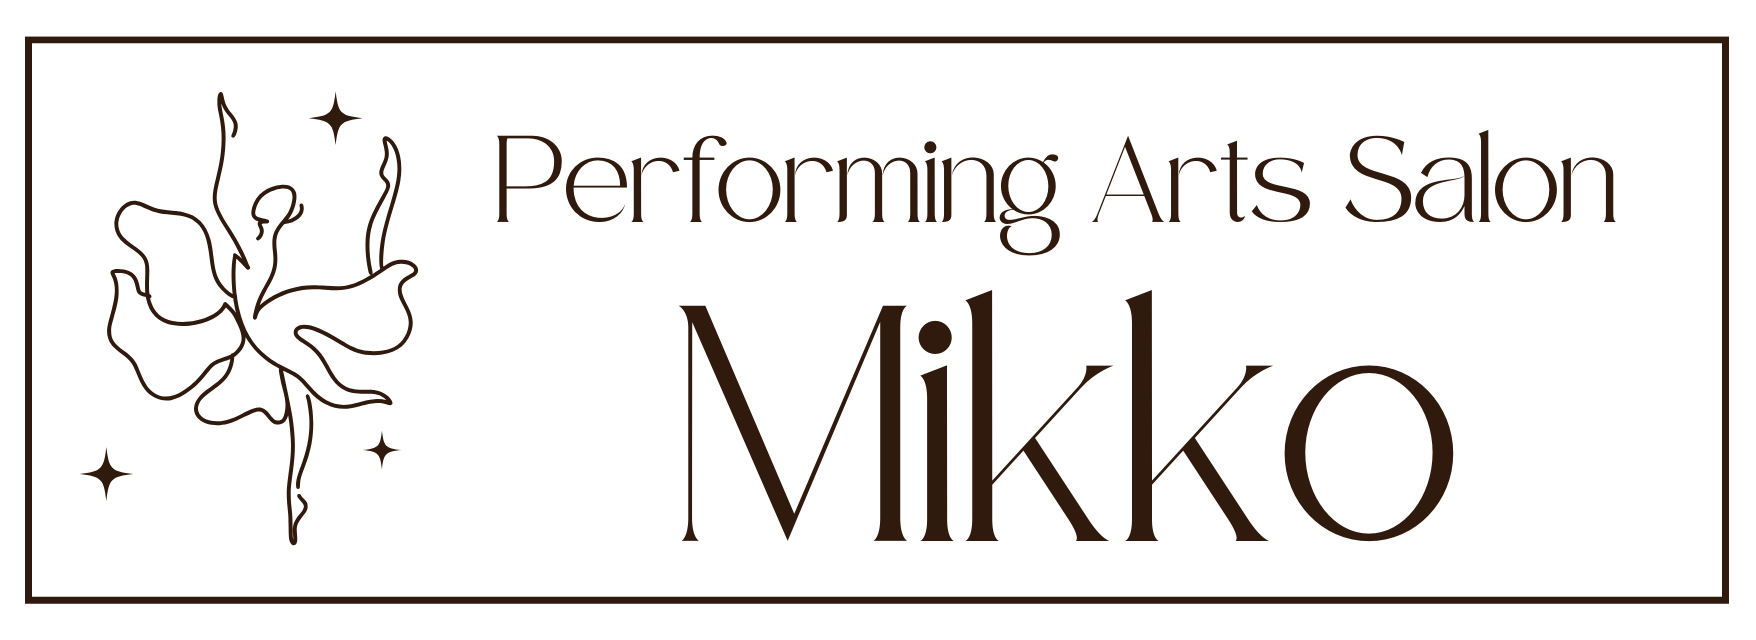 Performing Arts Salon "Mikko"